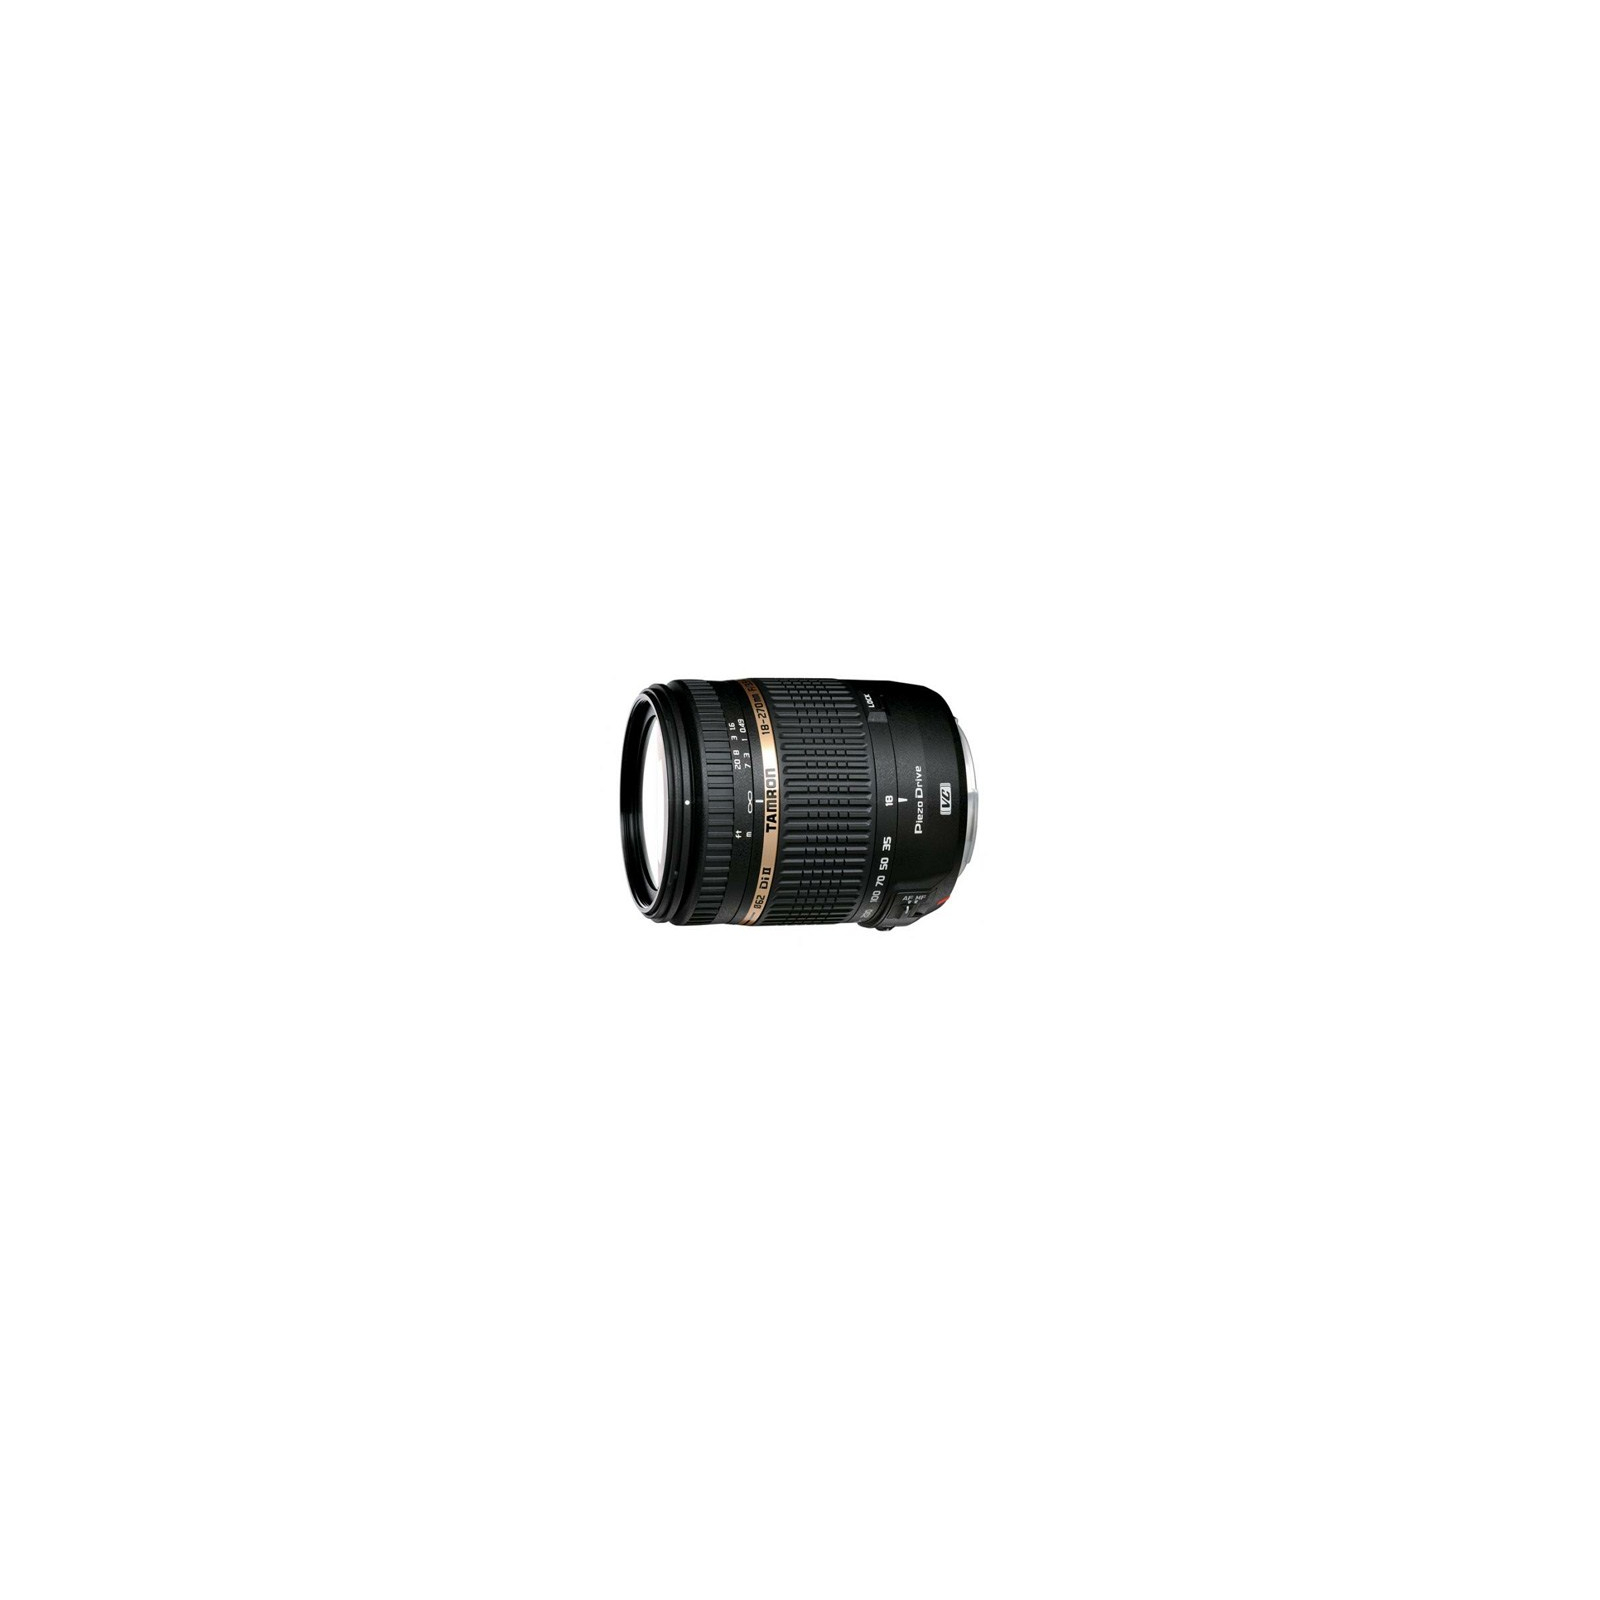 Об'єктив Tamron AF 18-270mm f/3.5-6.3 Di II VC PZD macro for Nikon (AF 18-270mm for Nikon)